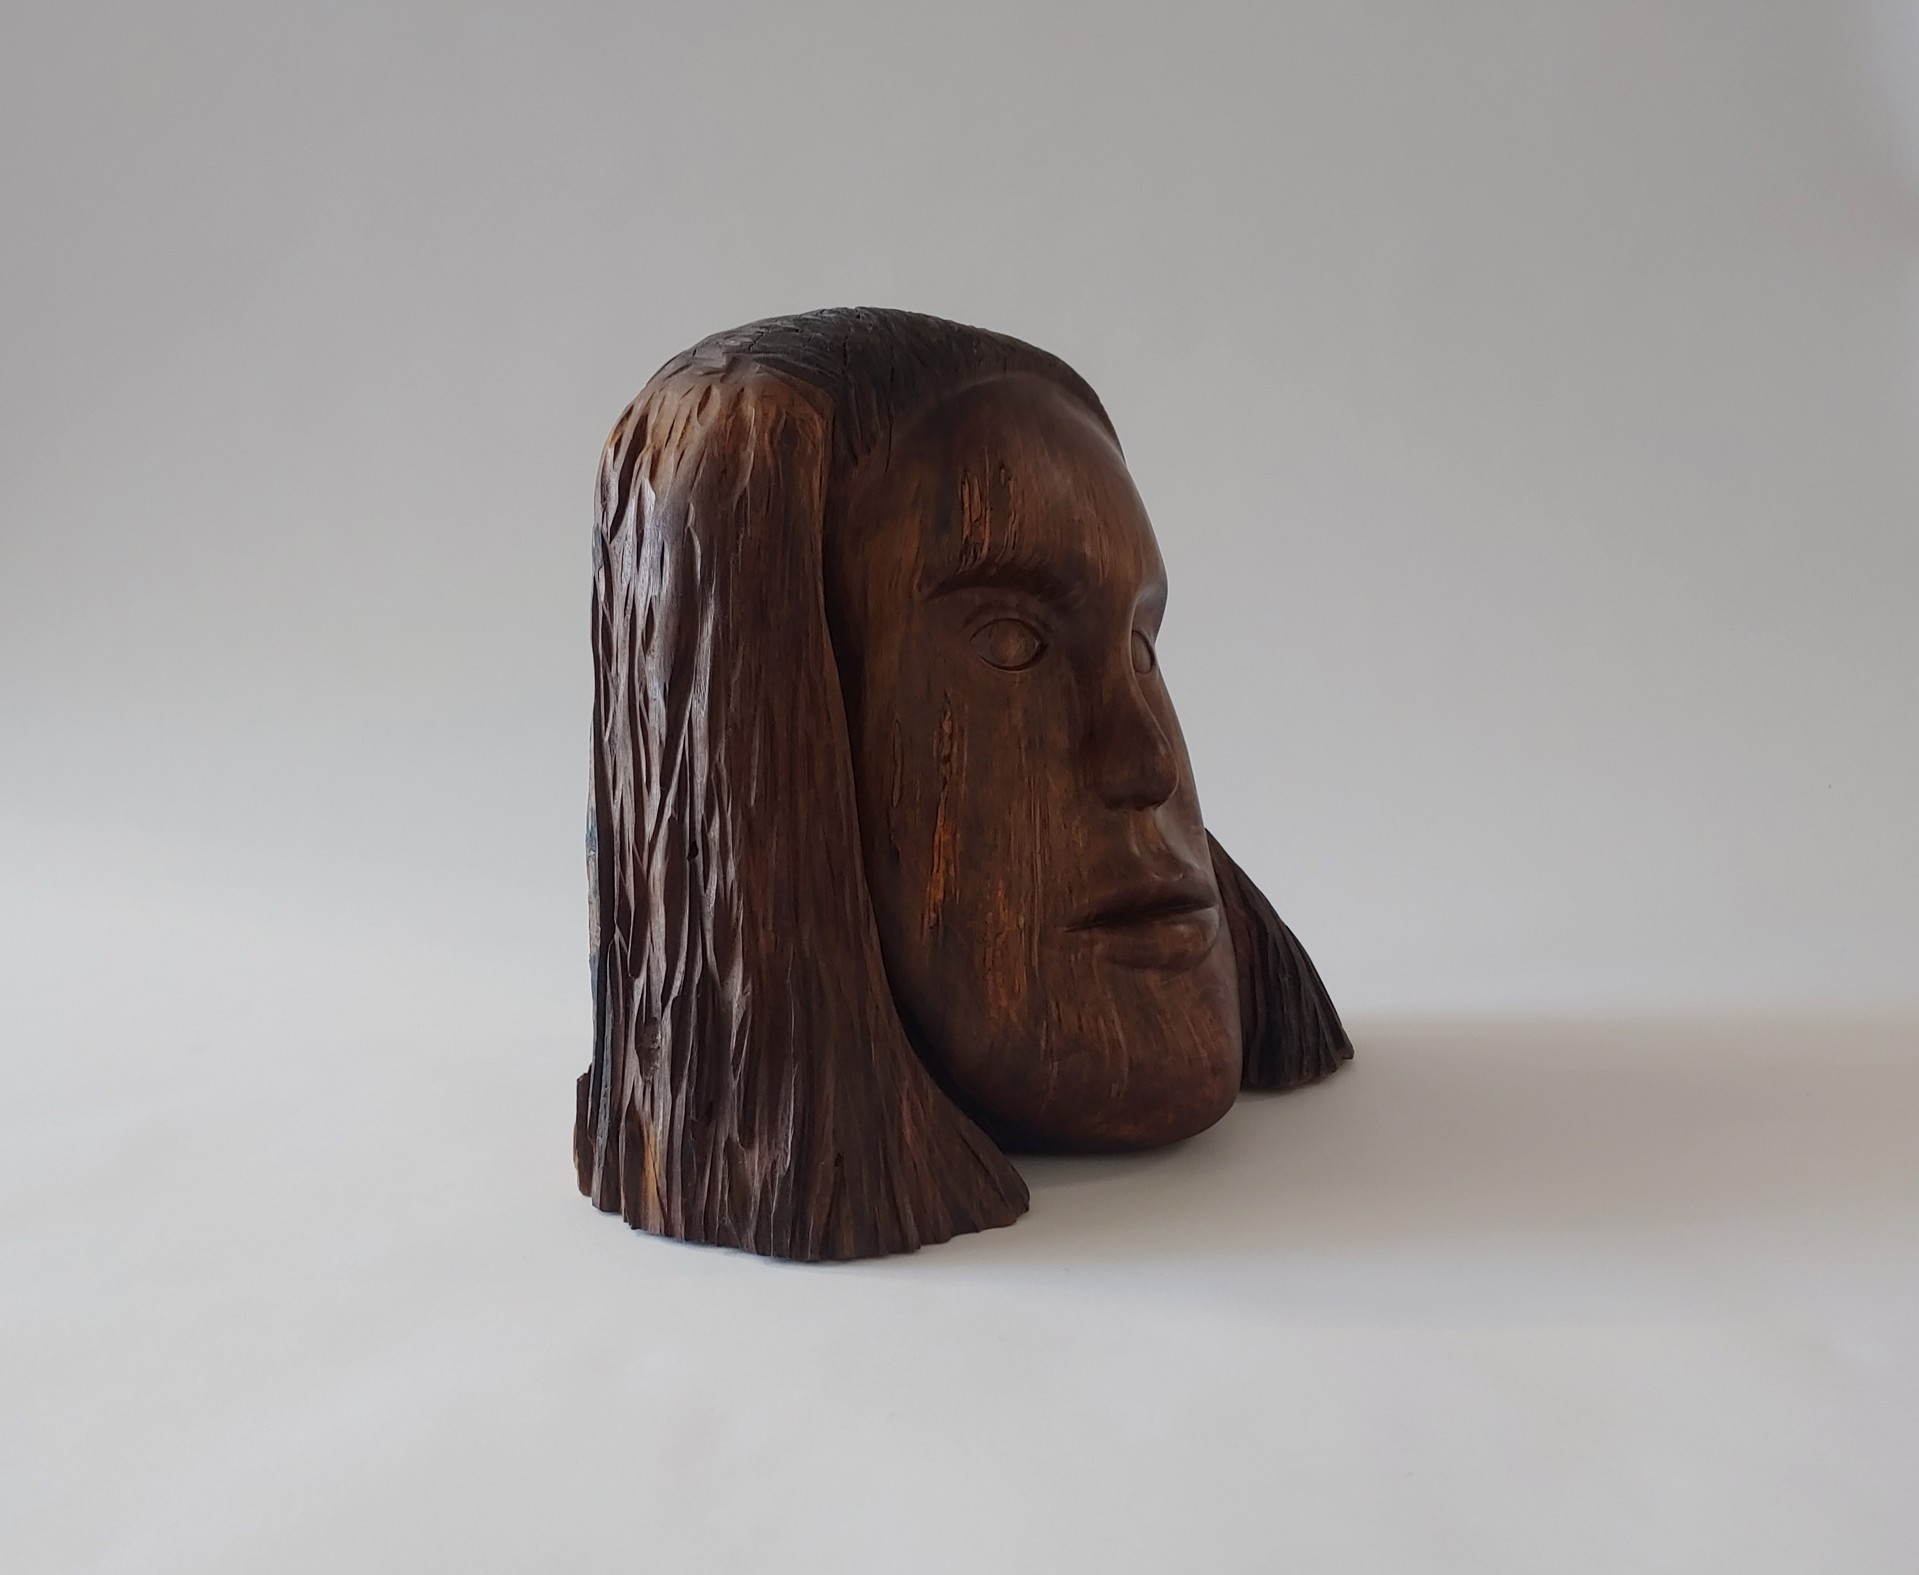 Eve - Wood Sculpture by David Amdur